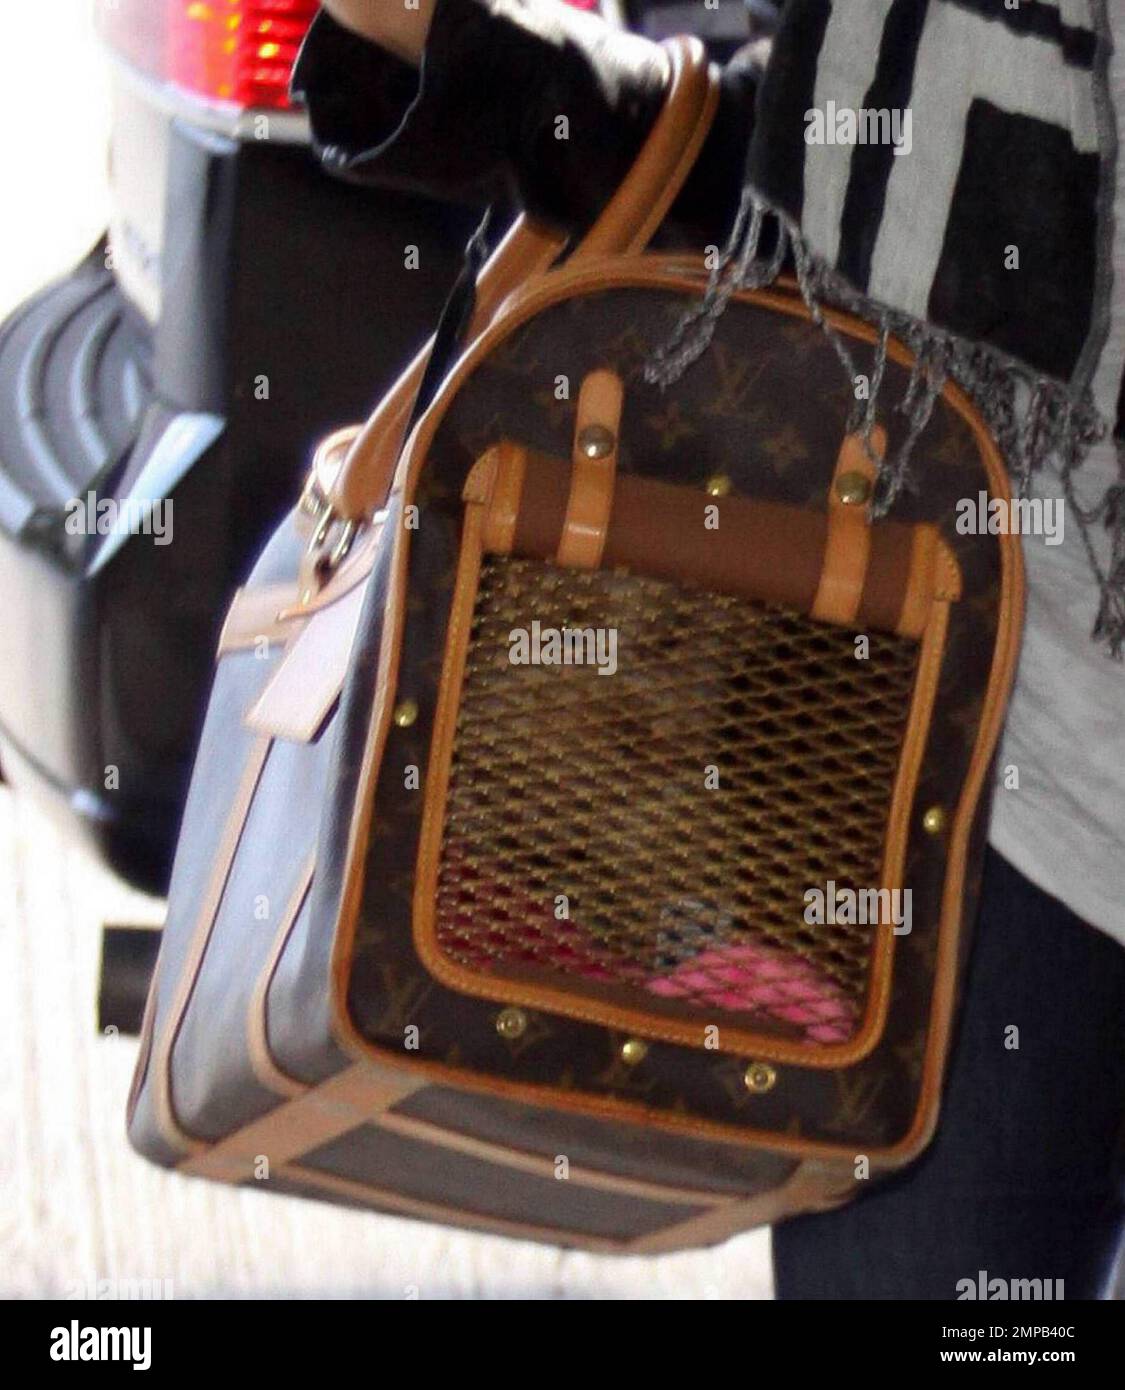 Ashley Tisdale  Cheap louis vuitton bags, Fashion, Cheap louis vuitton  handbags